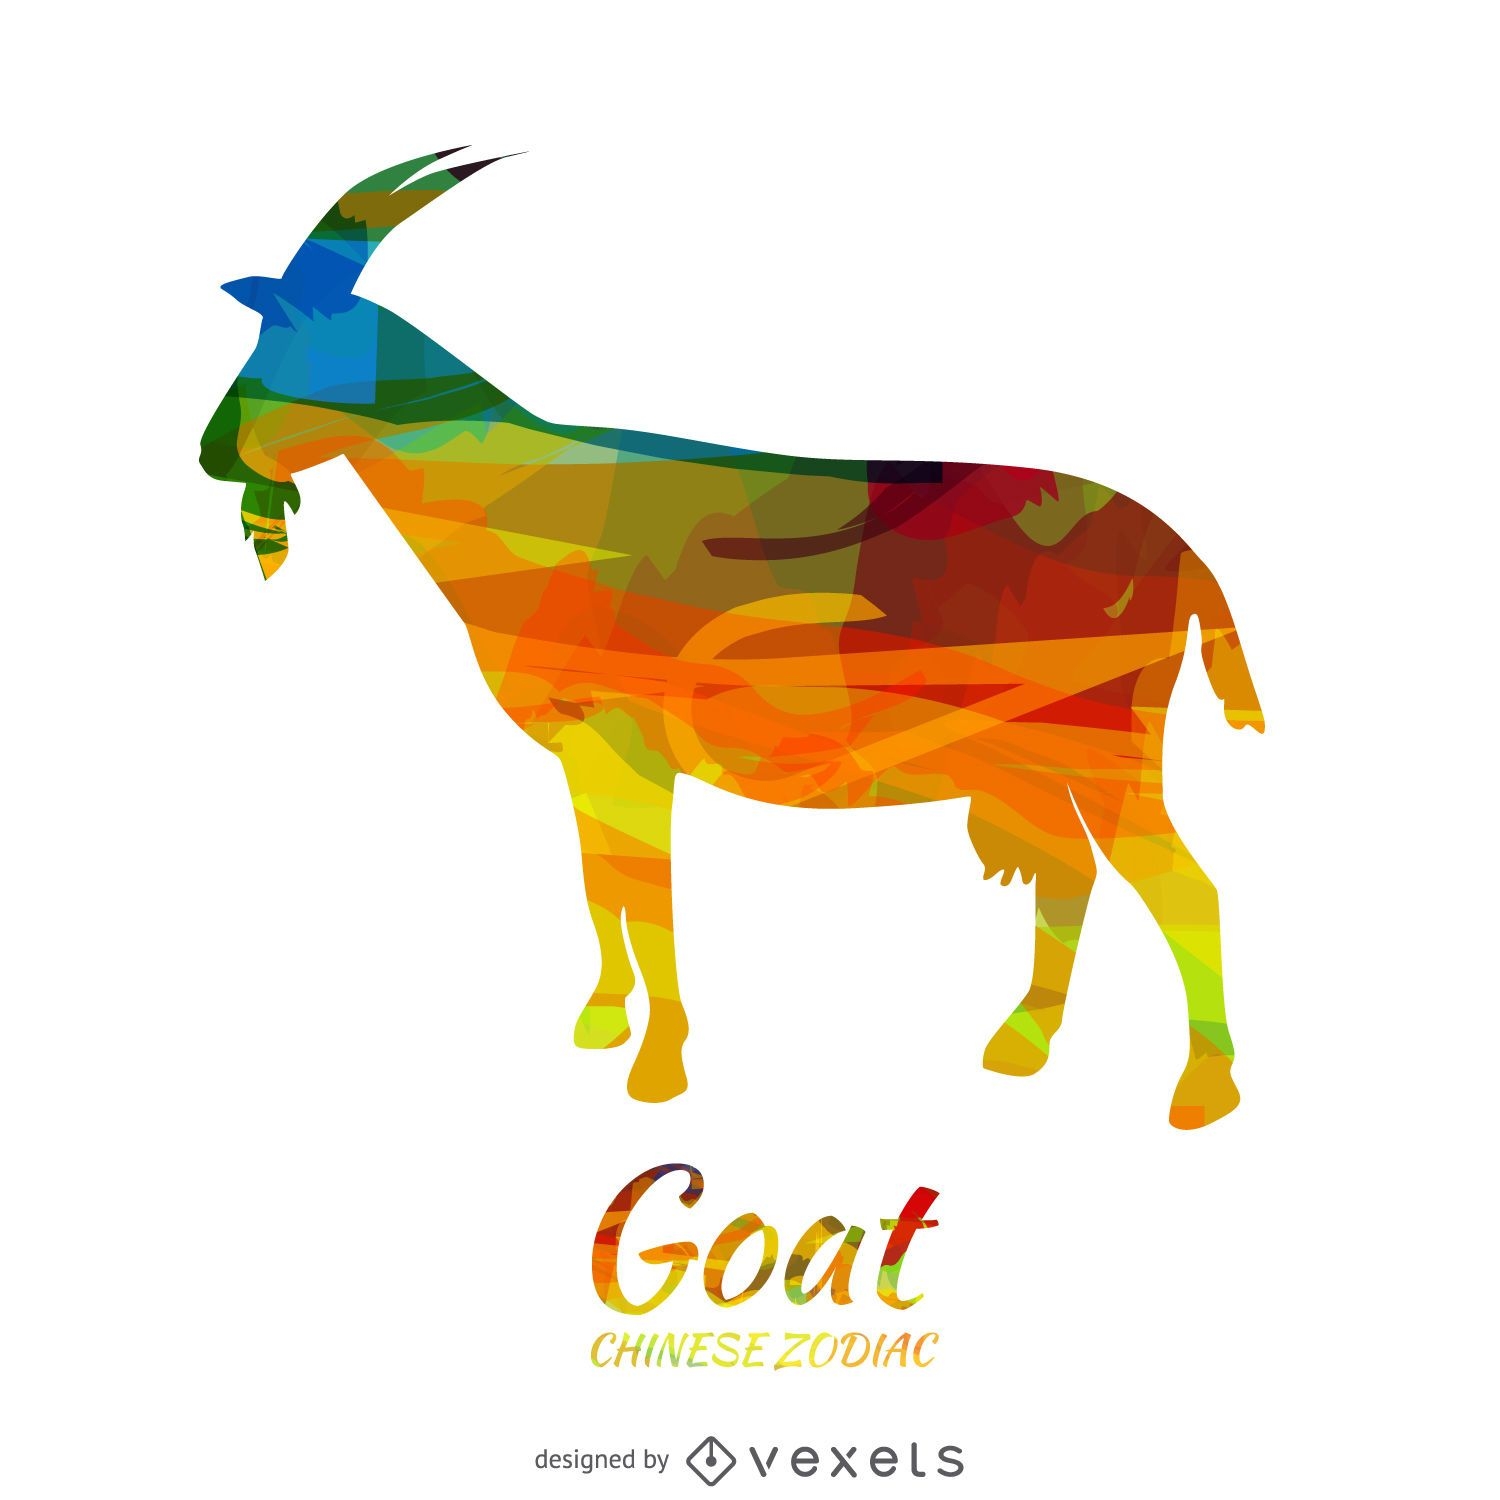 Chinese zodiac goat illustration